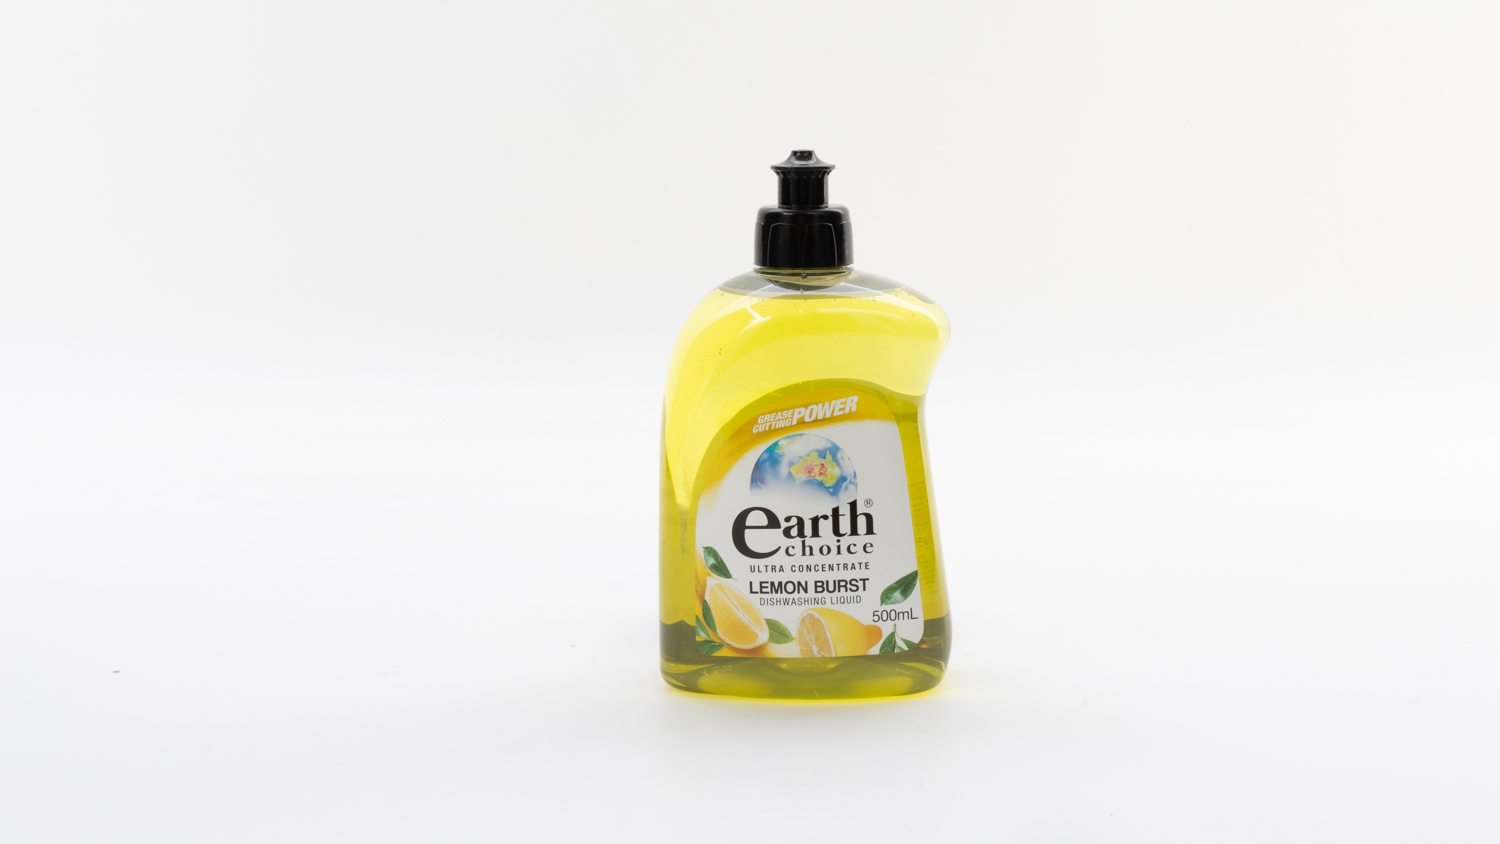 Earth choice Ultra Concentrate Lemon Burst Dishwashing Liquid carousel image